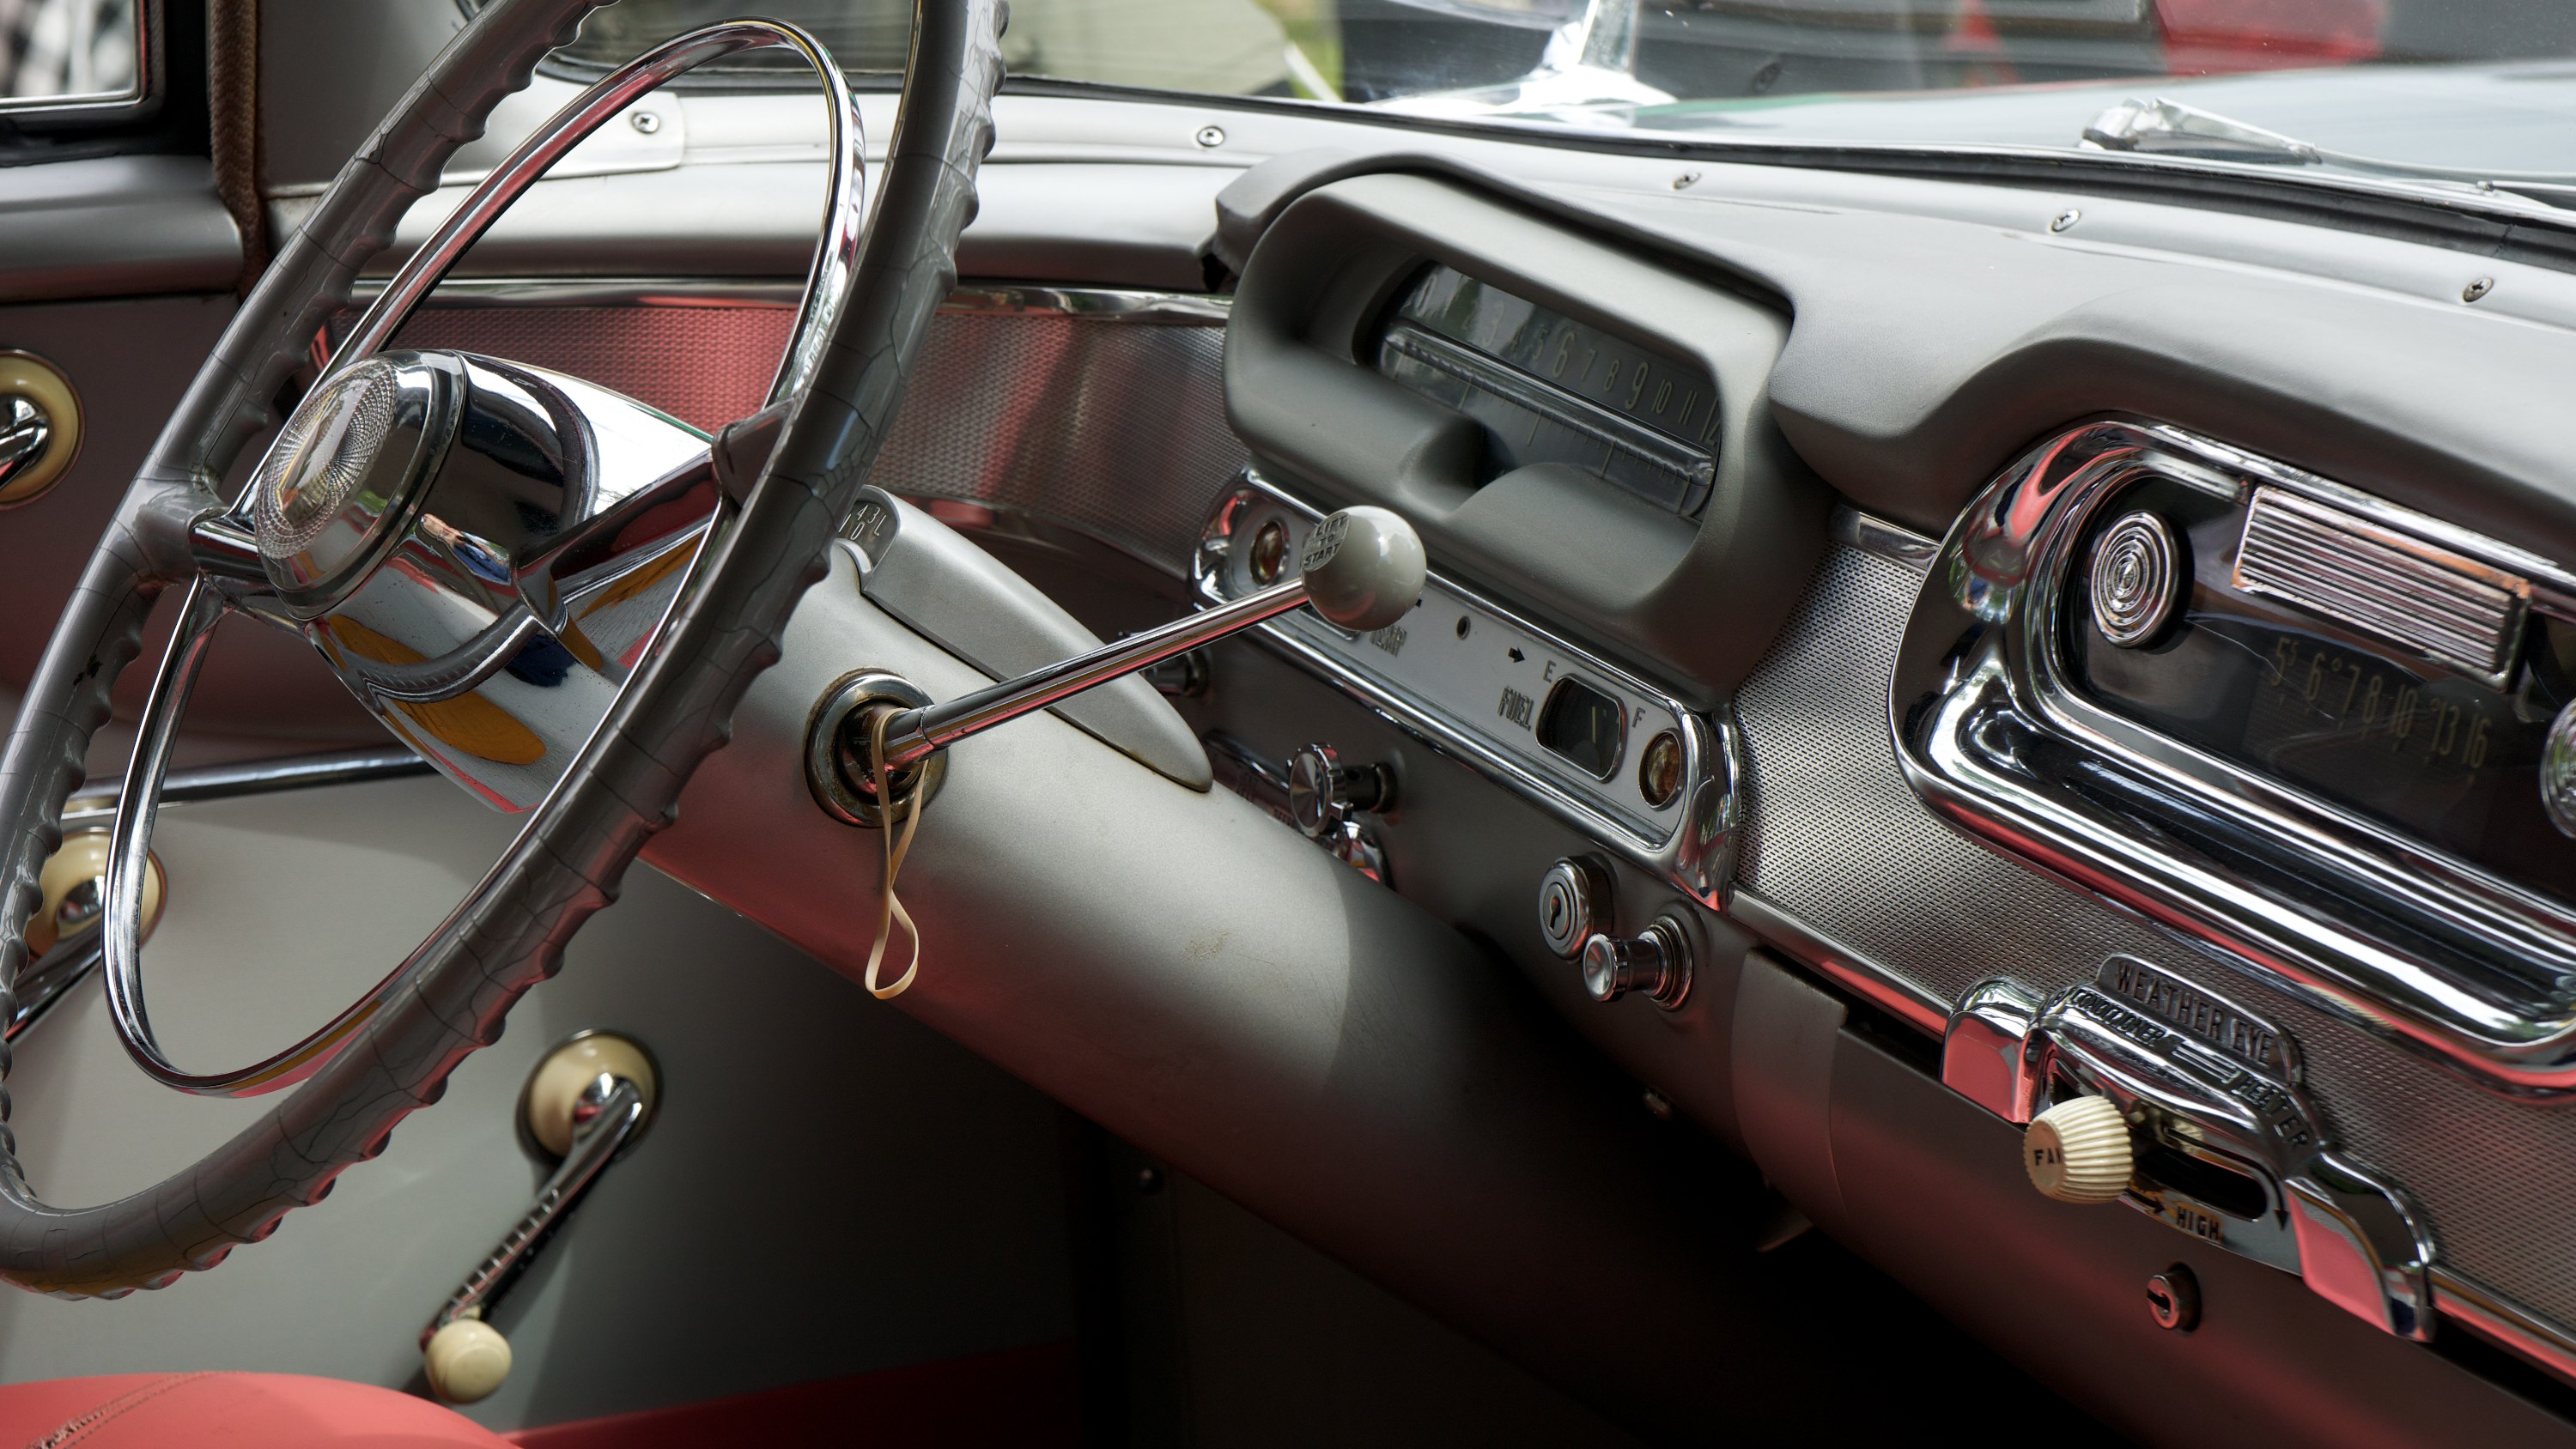 1957 Hudson Hornet, Car, Dashboard, Electronics, Indoor, HQ Photo